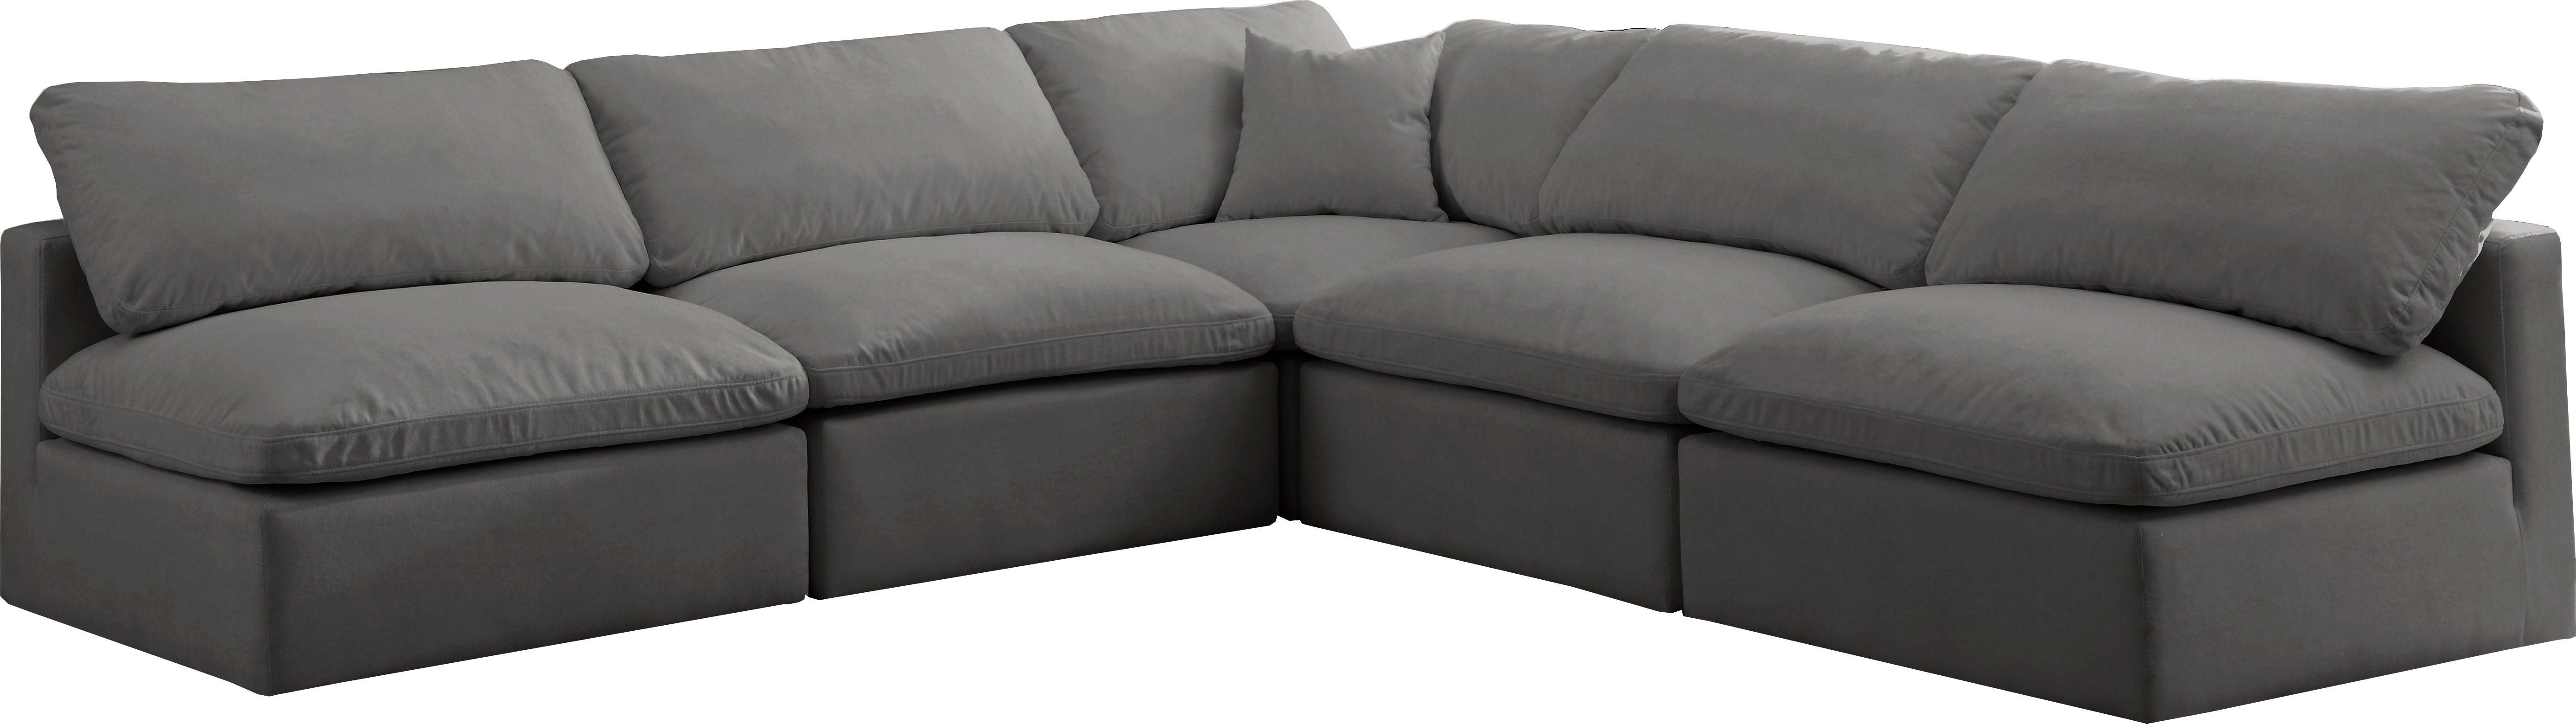 Meridian Furniture - Plush - Velvet Standart Comfort 5 Piece Modular Sectional - Grey - Fabric - 5th Avenue Furniture